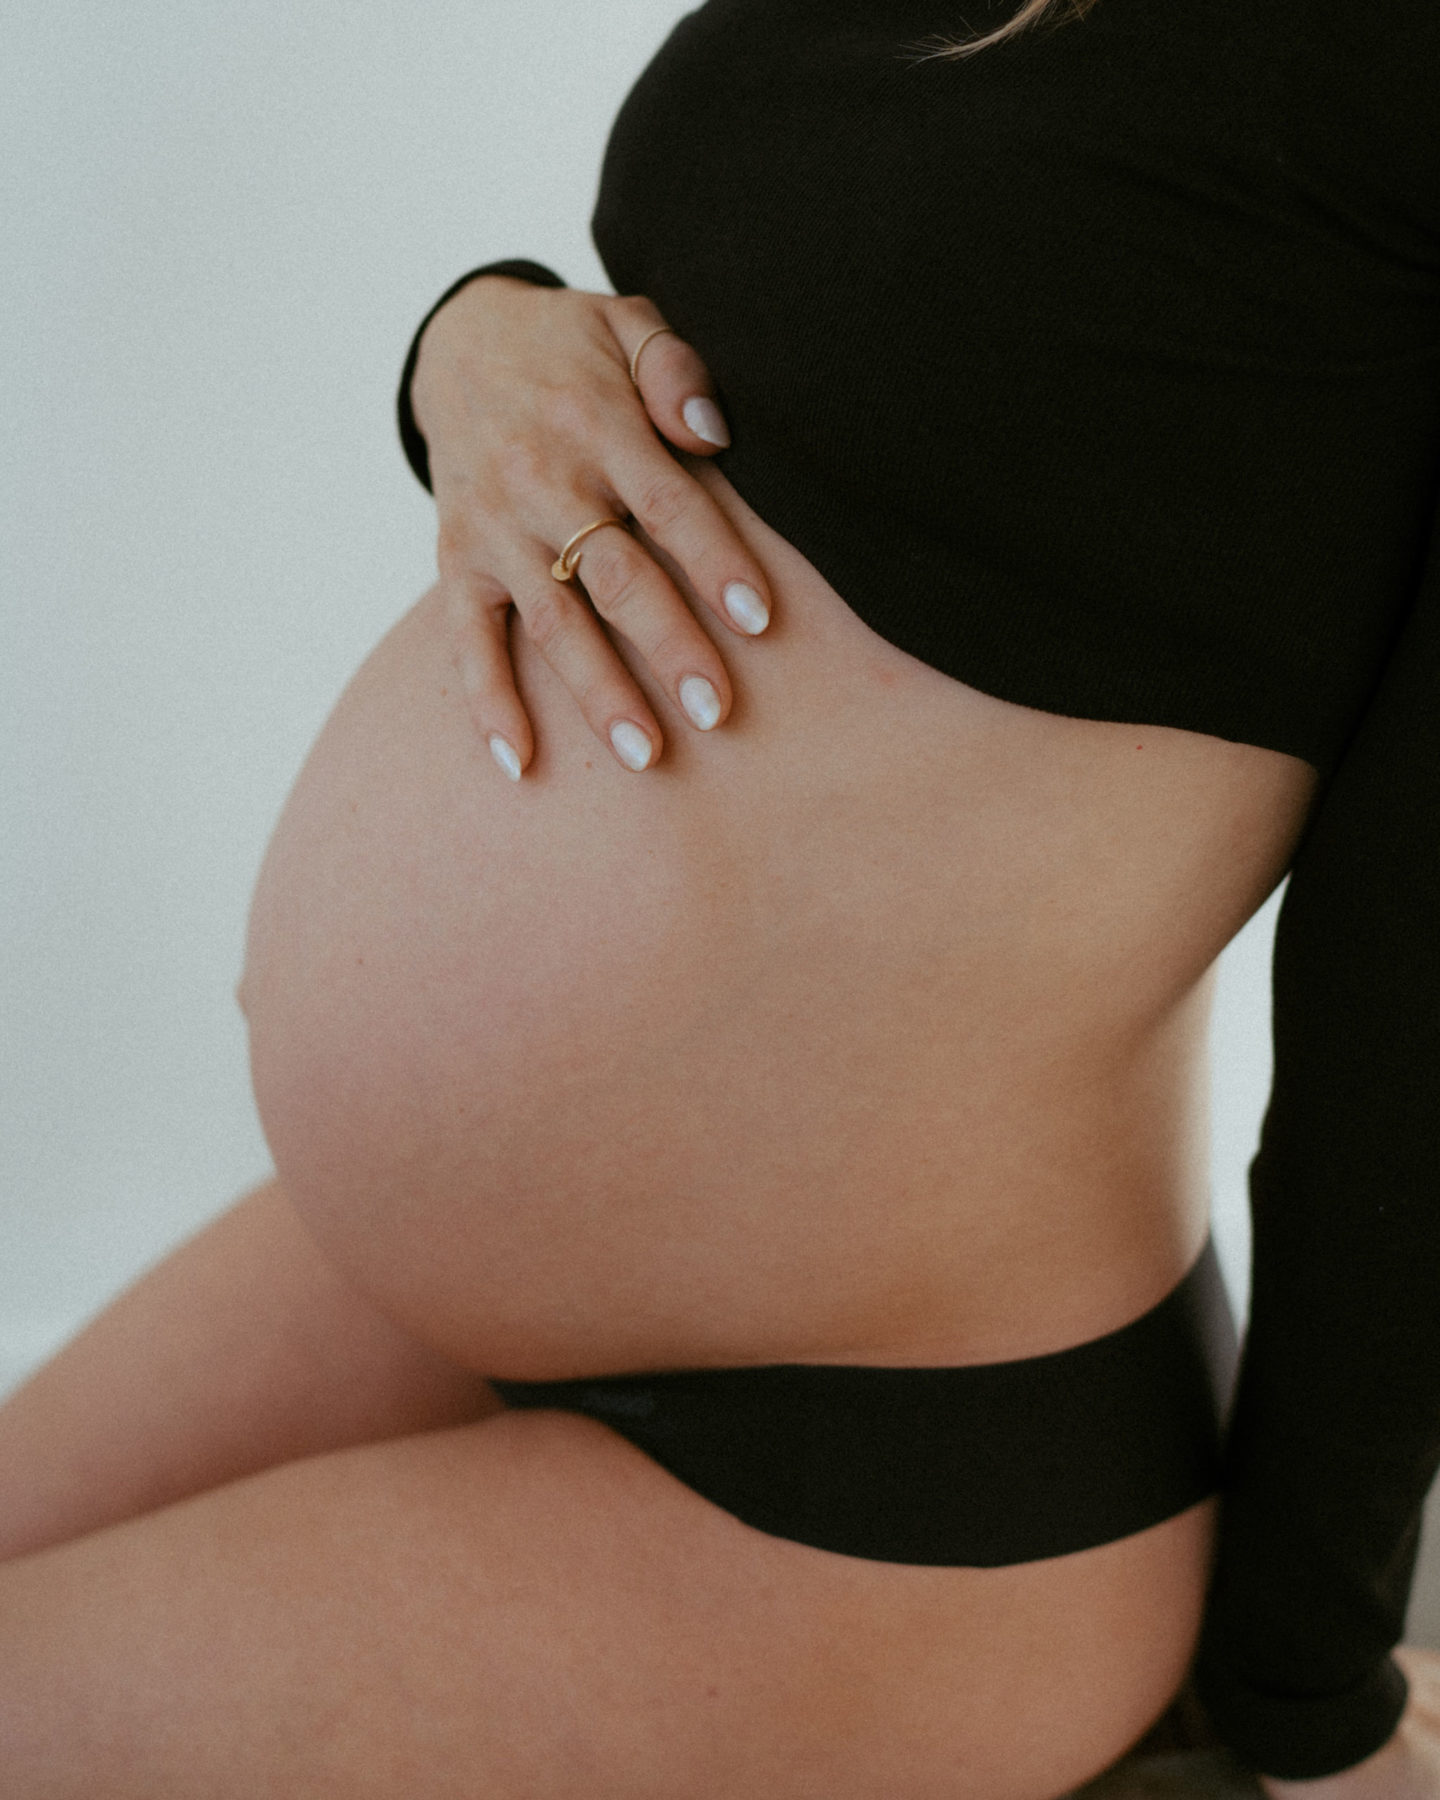 cortney bigelow - seattle maternity shoot - the grey edit - pamela tormanen photo - studio photography